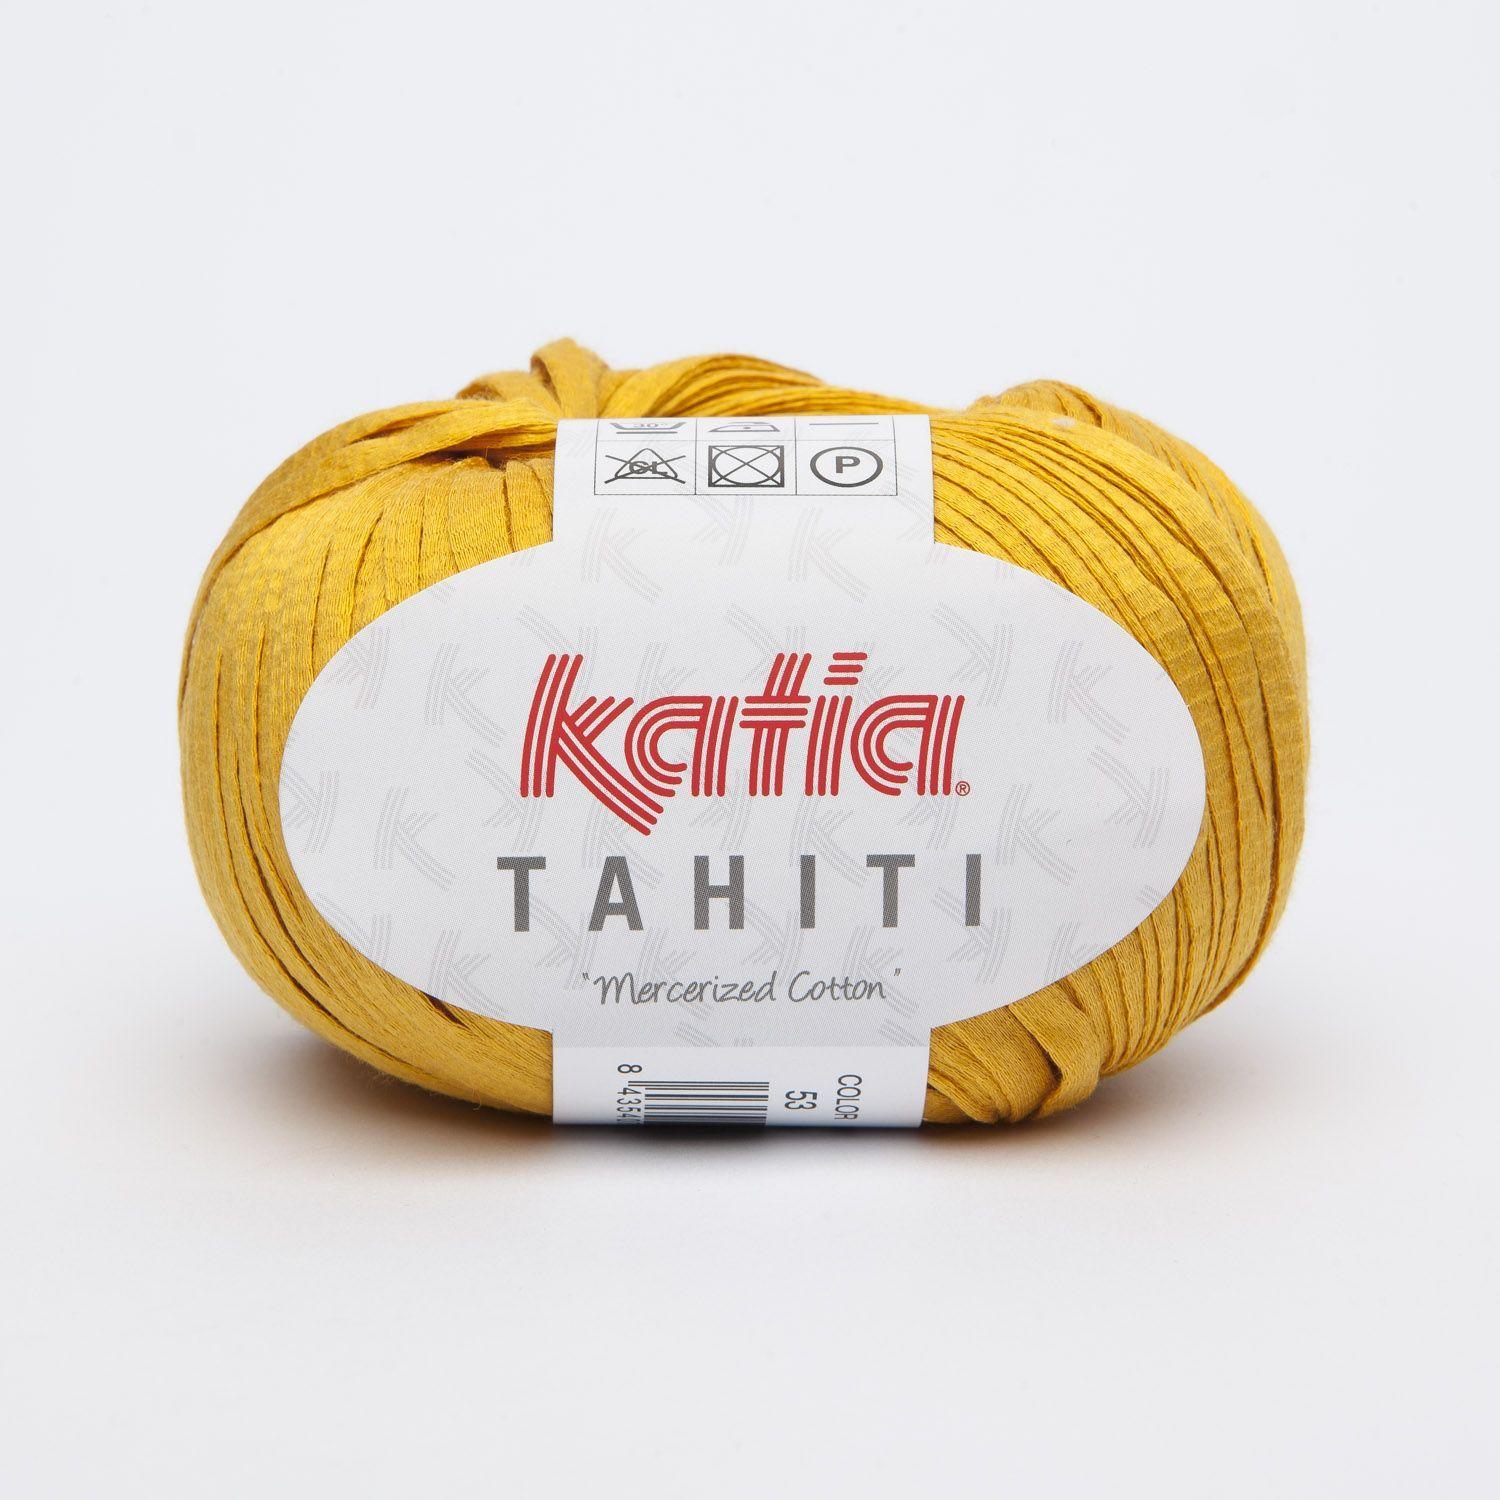 Ethnic Color Earth Logo - TAHITI yarn of Spring / Summer from Katia. Ethnic Earth Colors